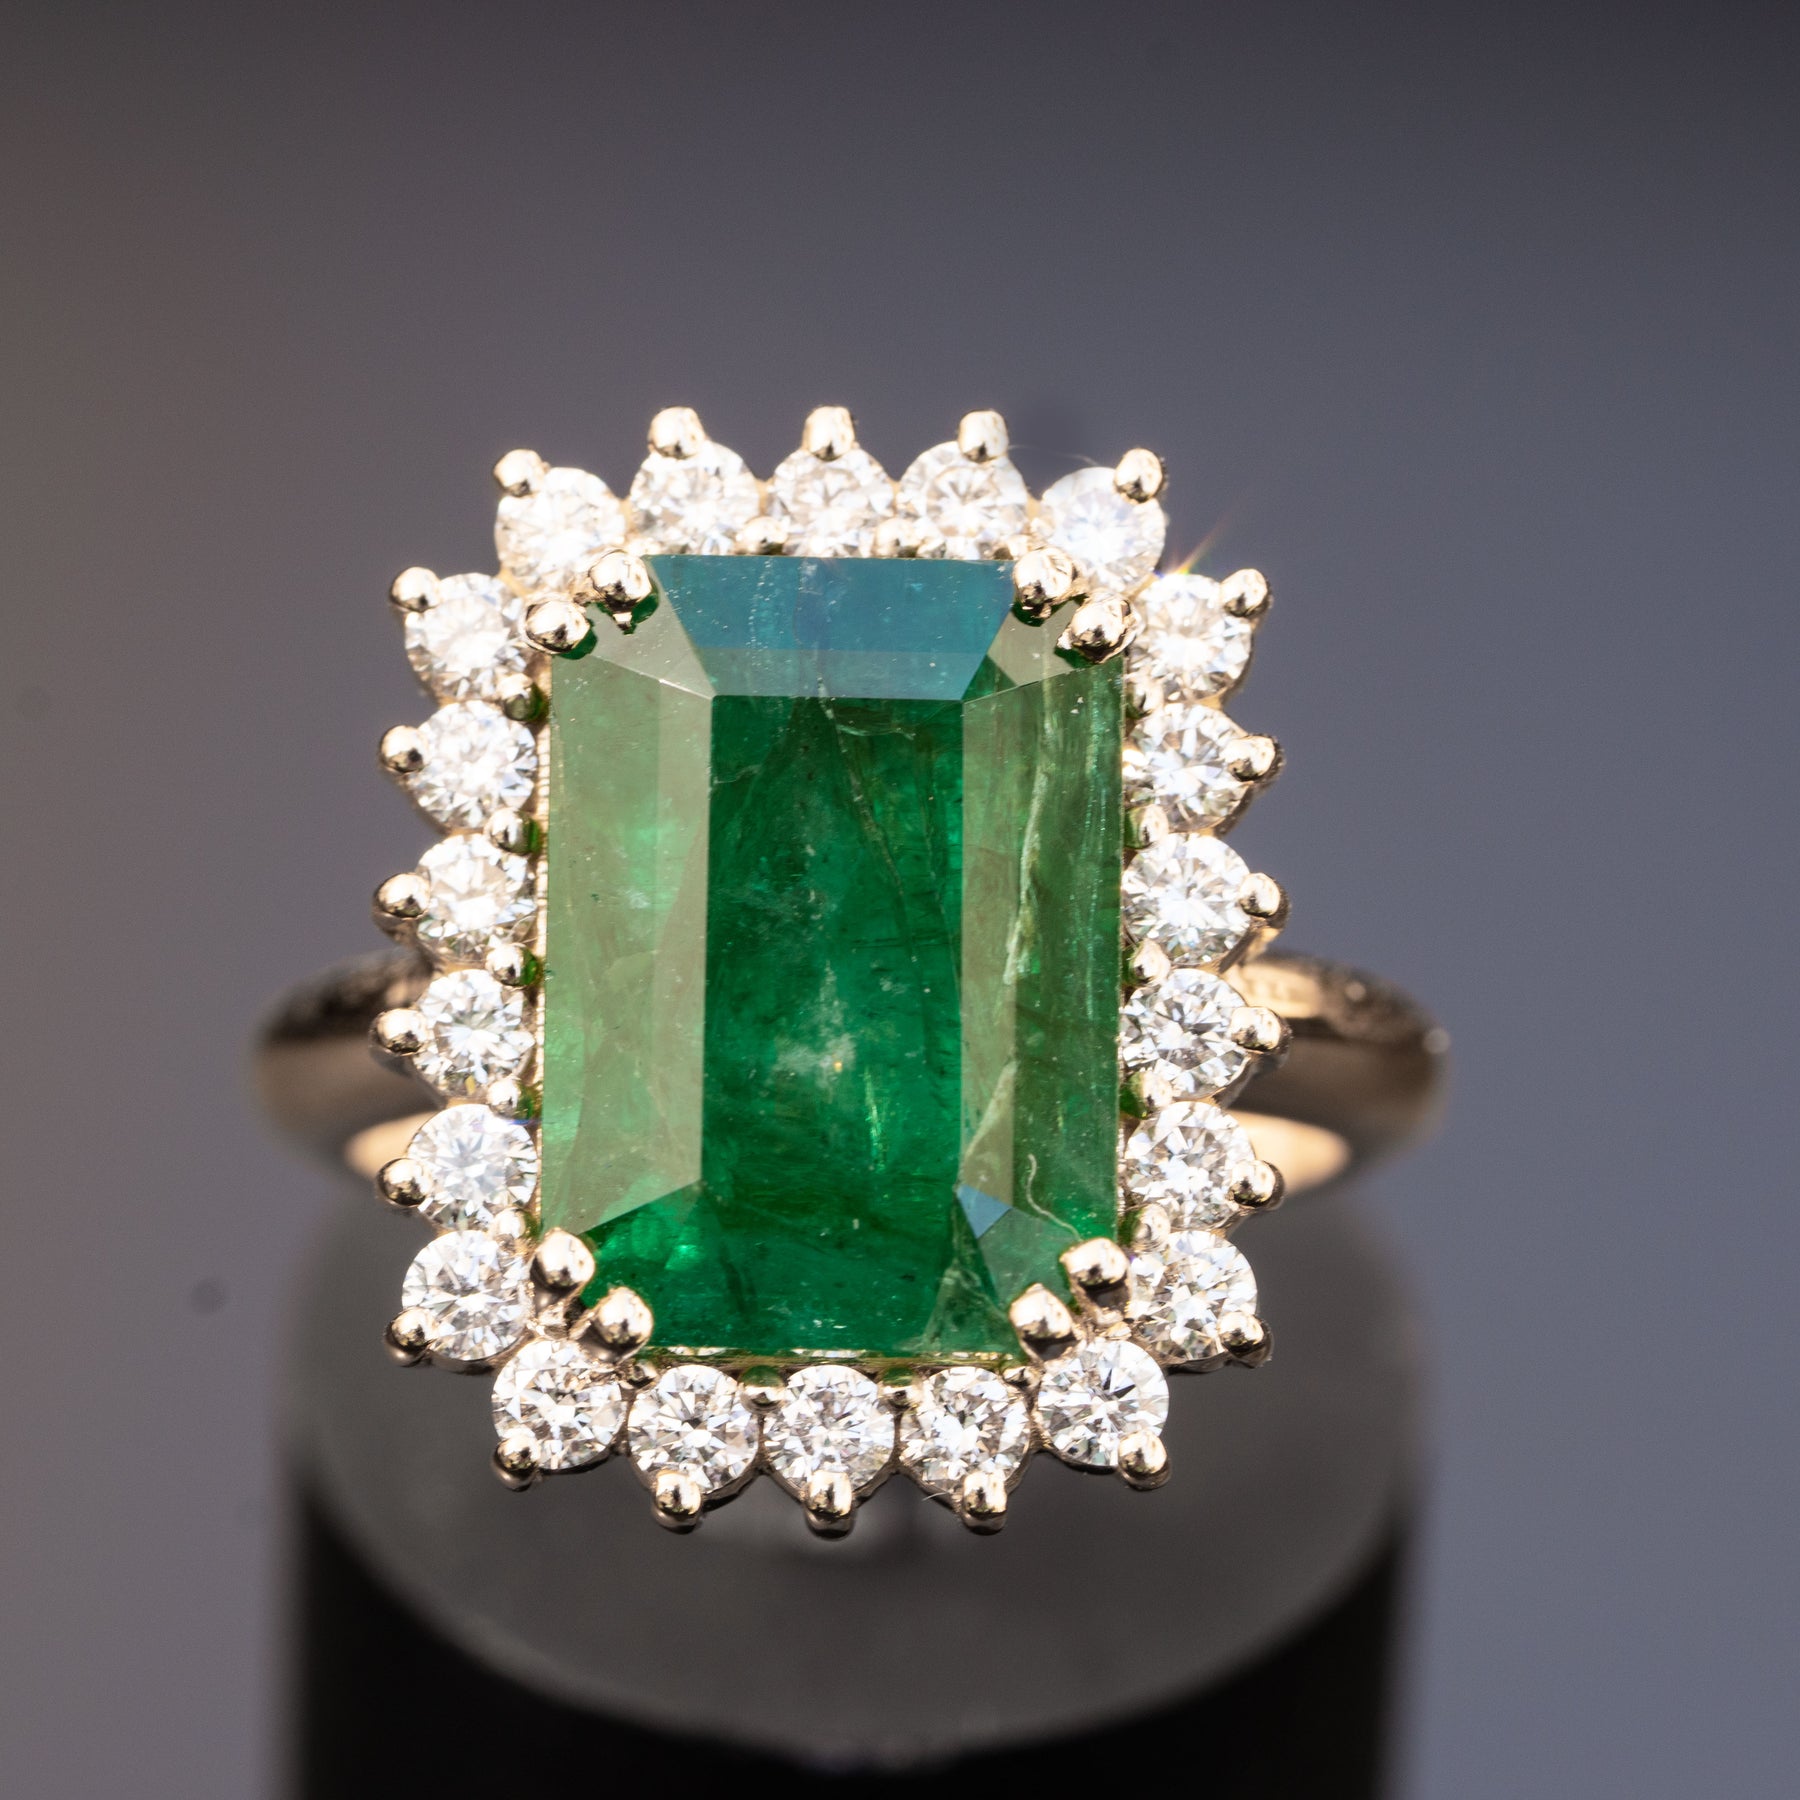 1.75 Carat Green Emerald & Diamond Ring in White Gold